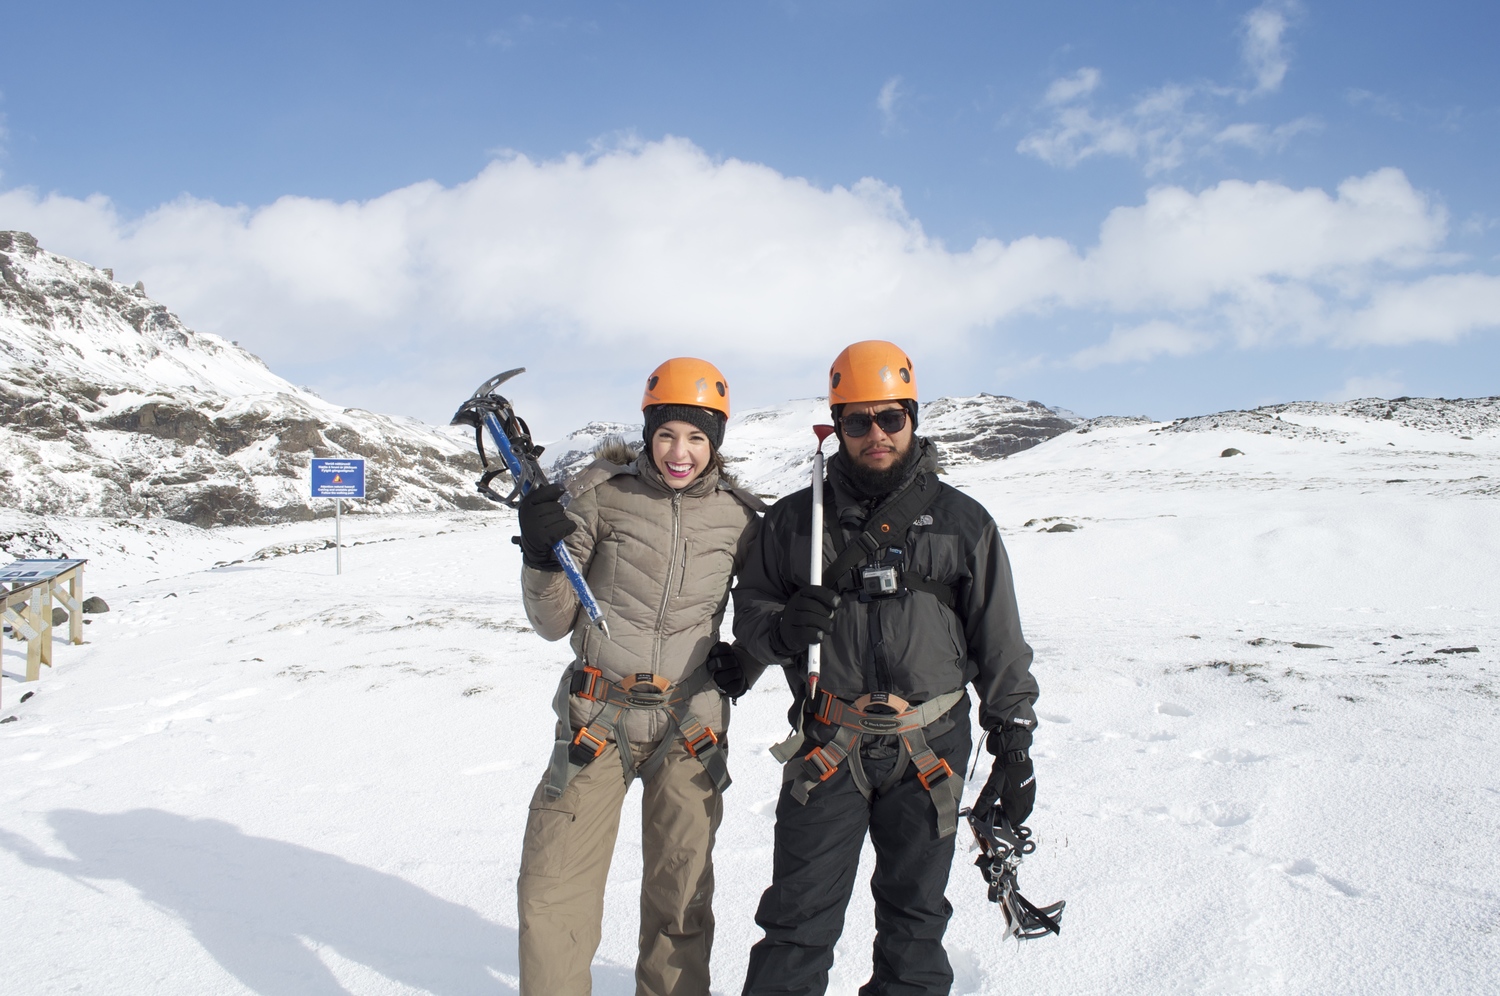 Luis & Sarah wearing the full ice climbing gear.